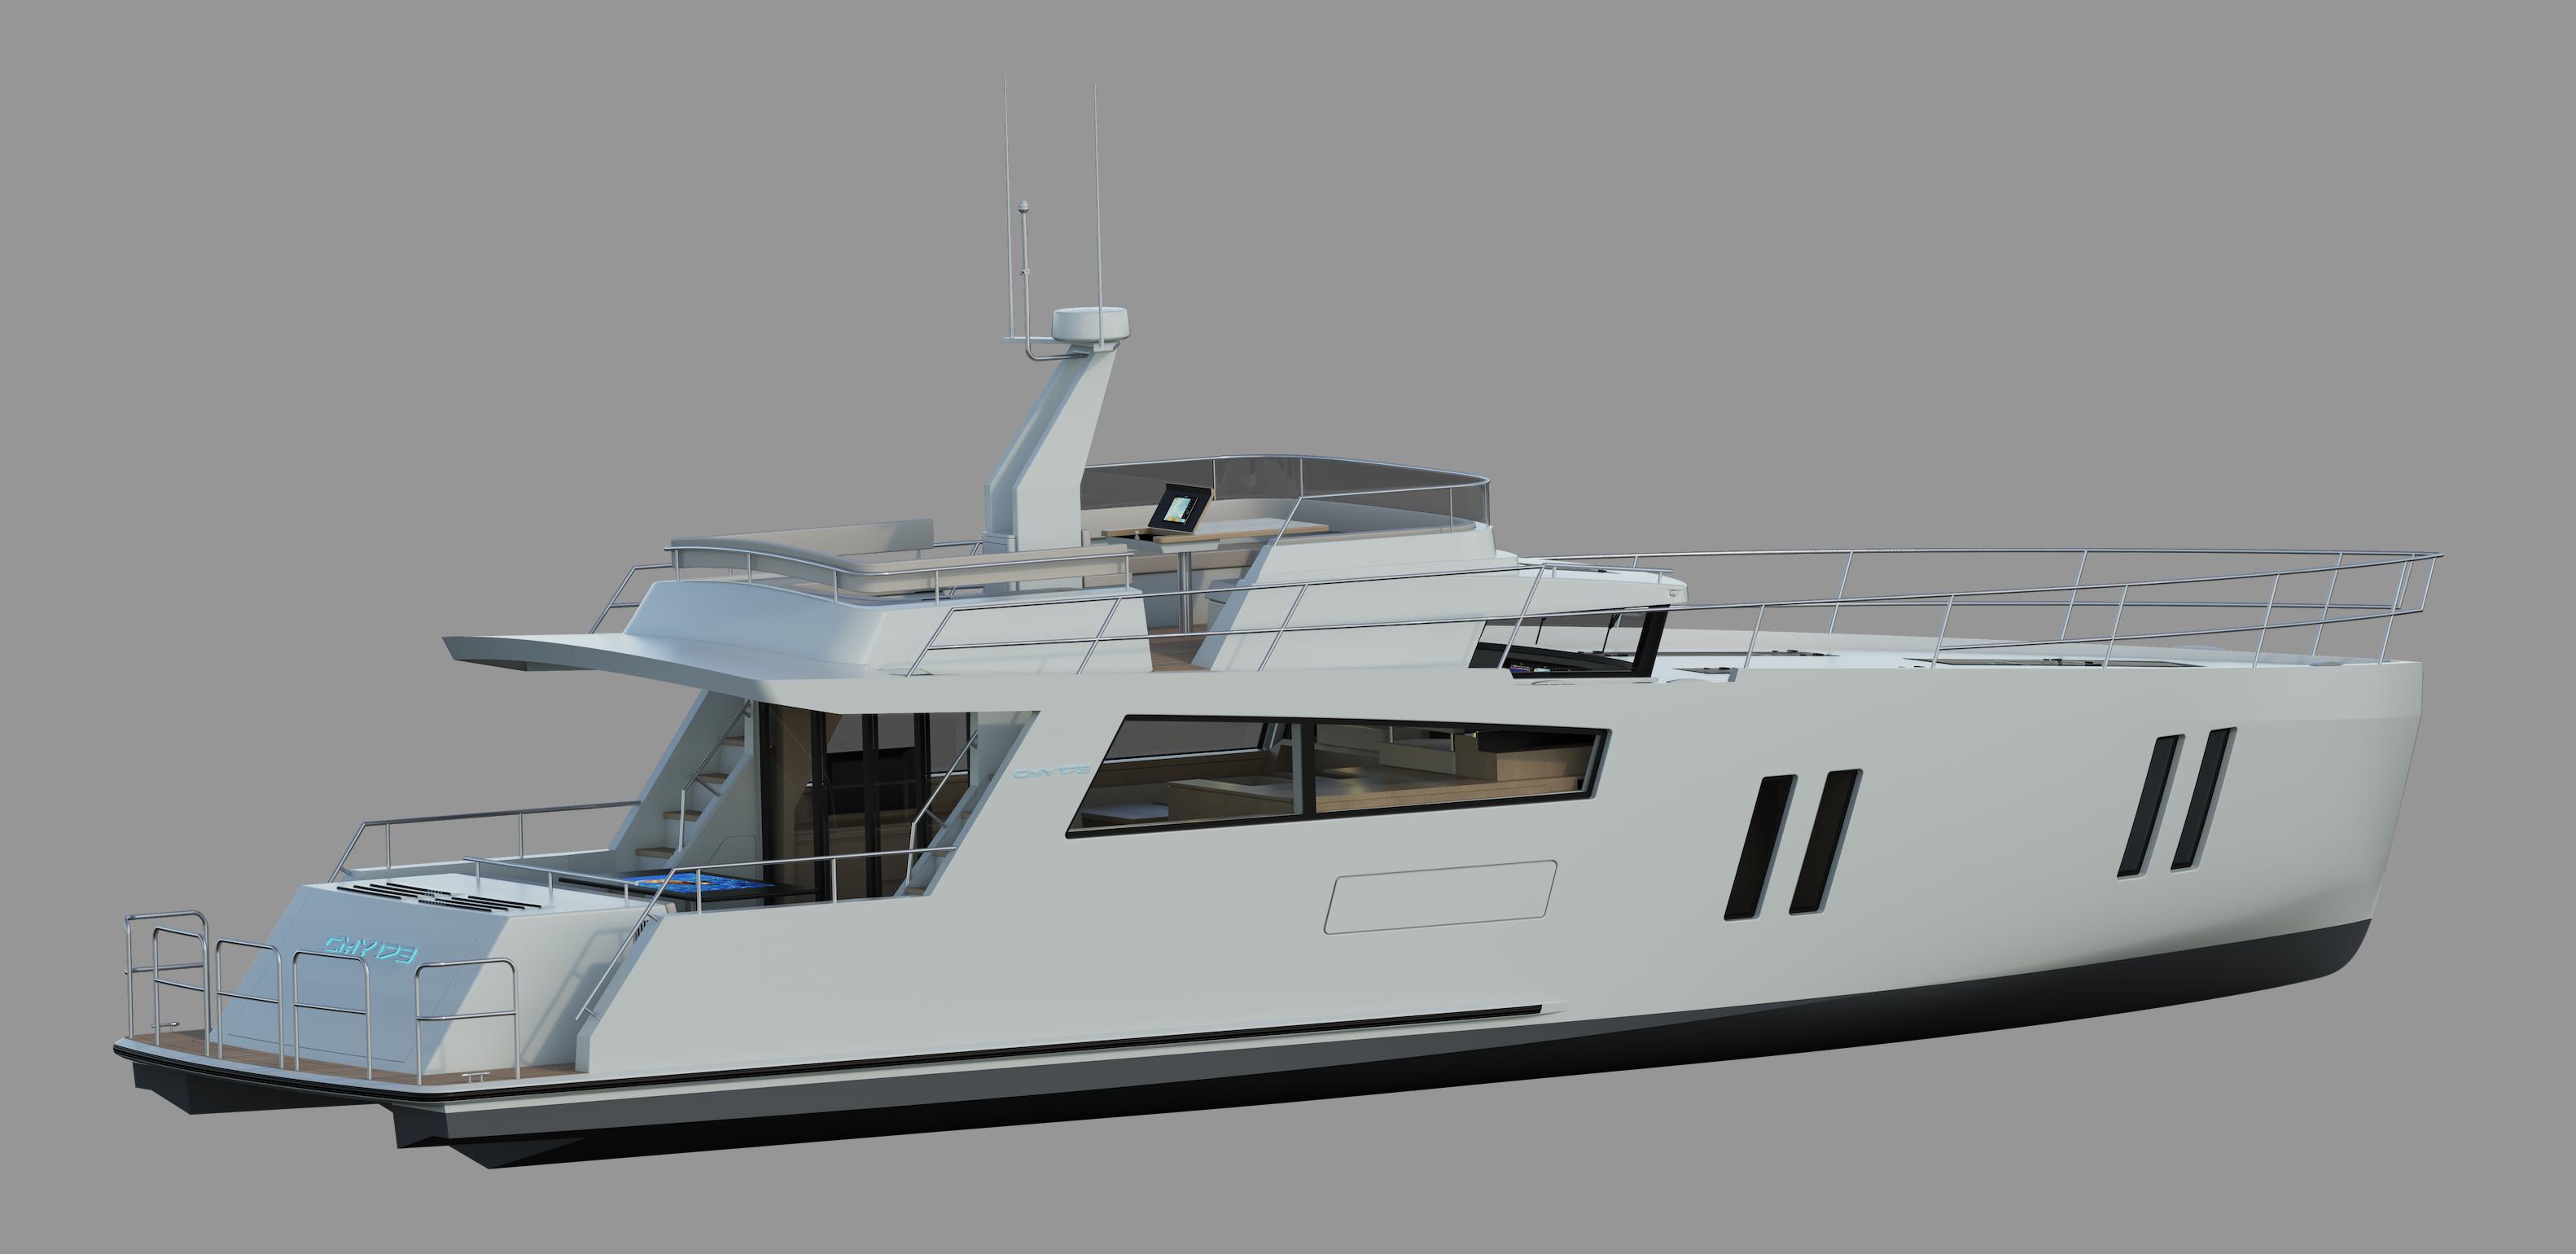 compact mega yachts cmy 173